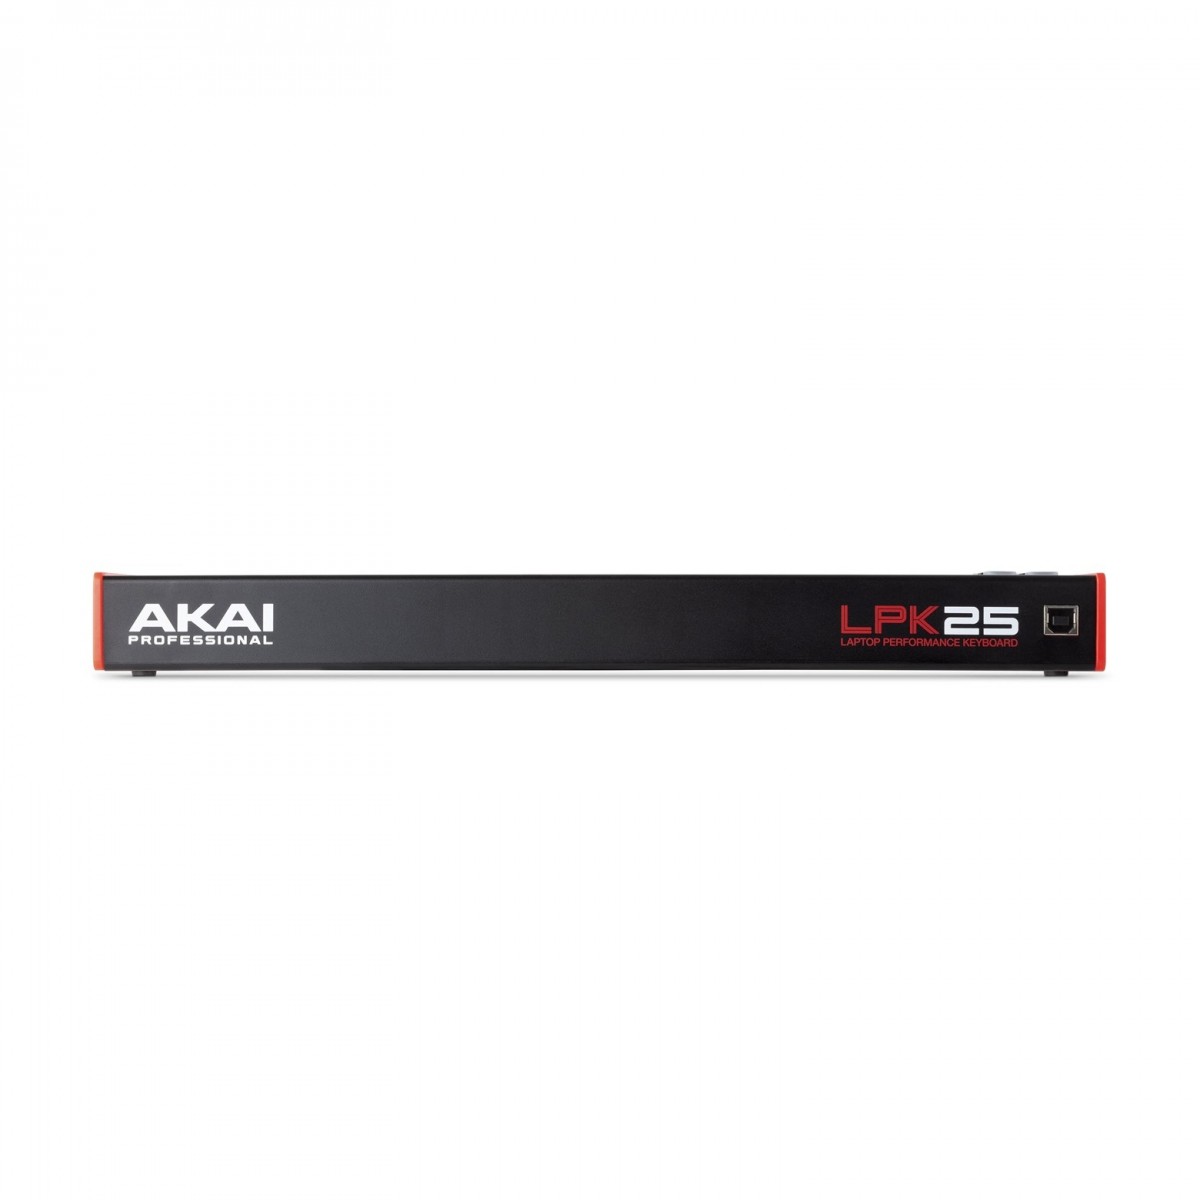 Akai Professional LPK25 MKII.6